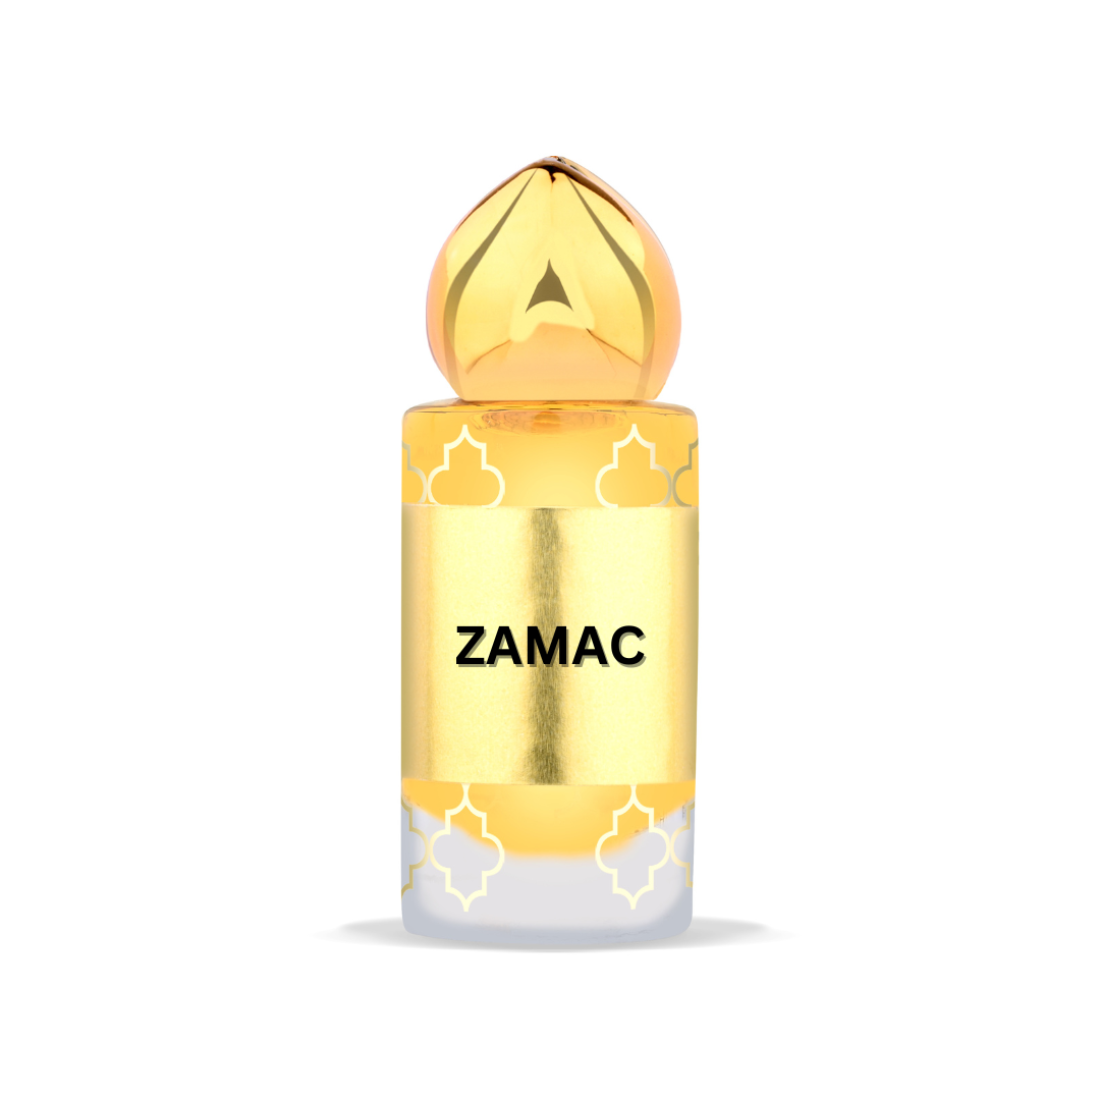 ZAMAC Premium Attar